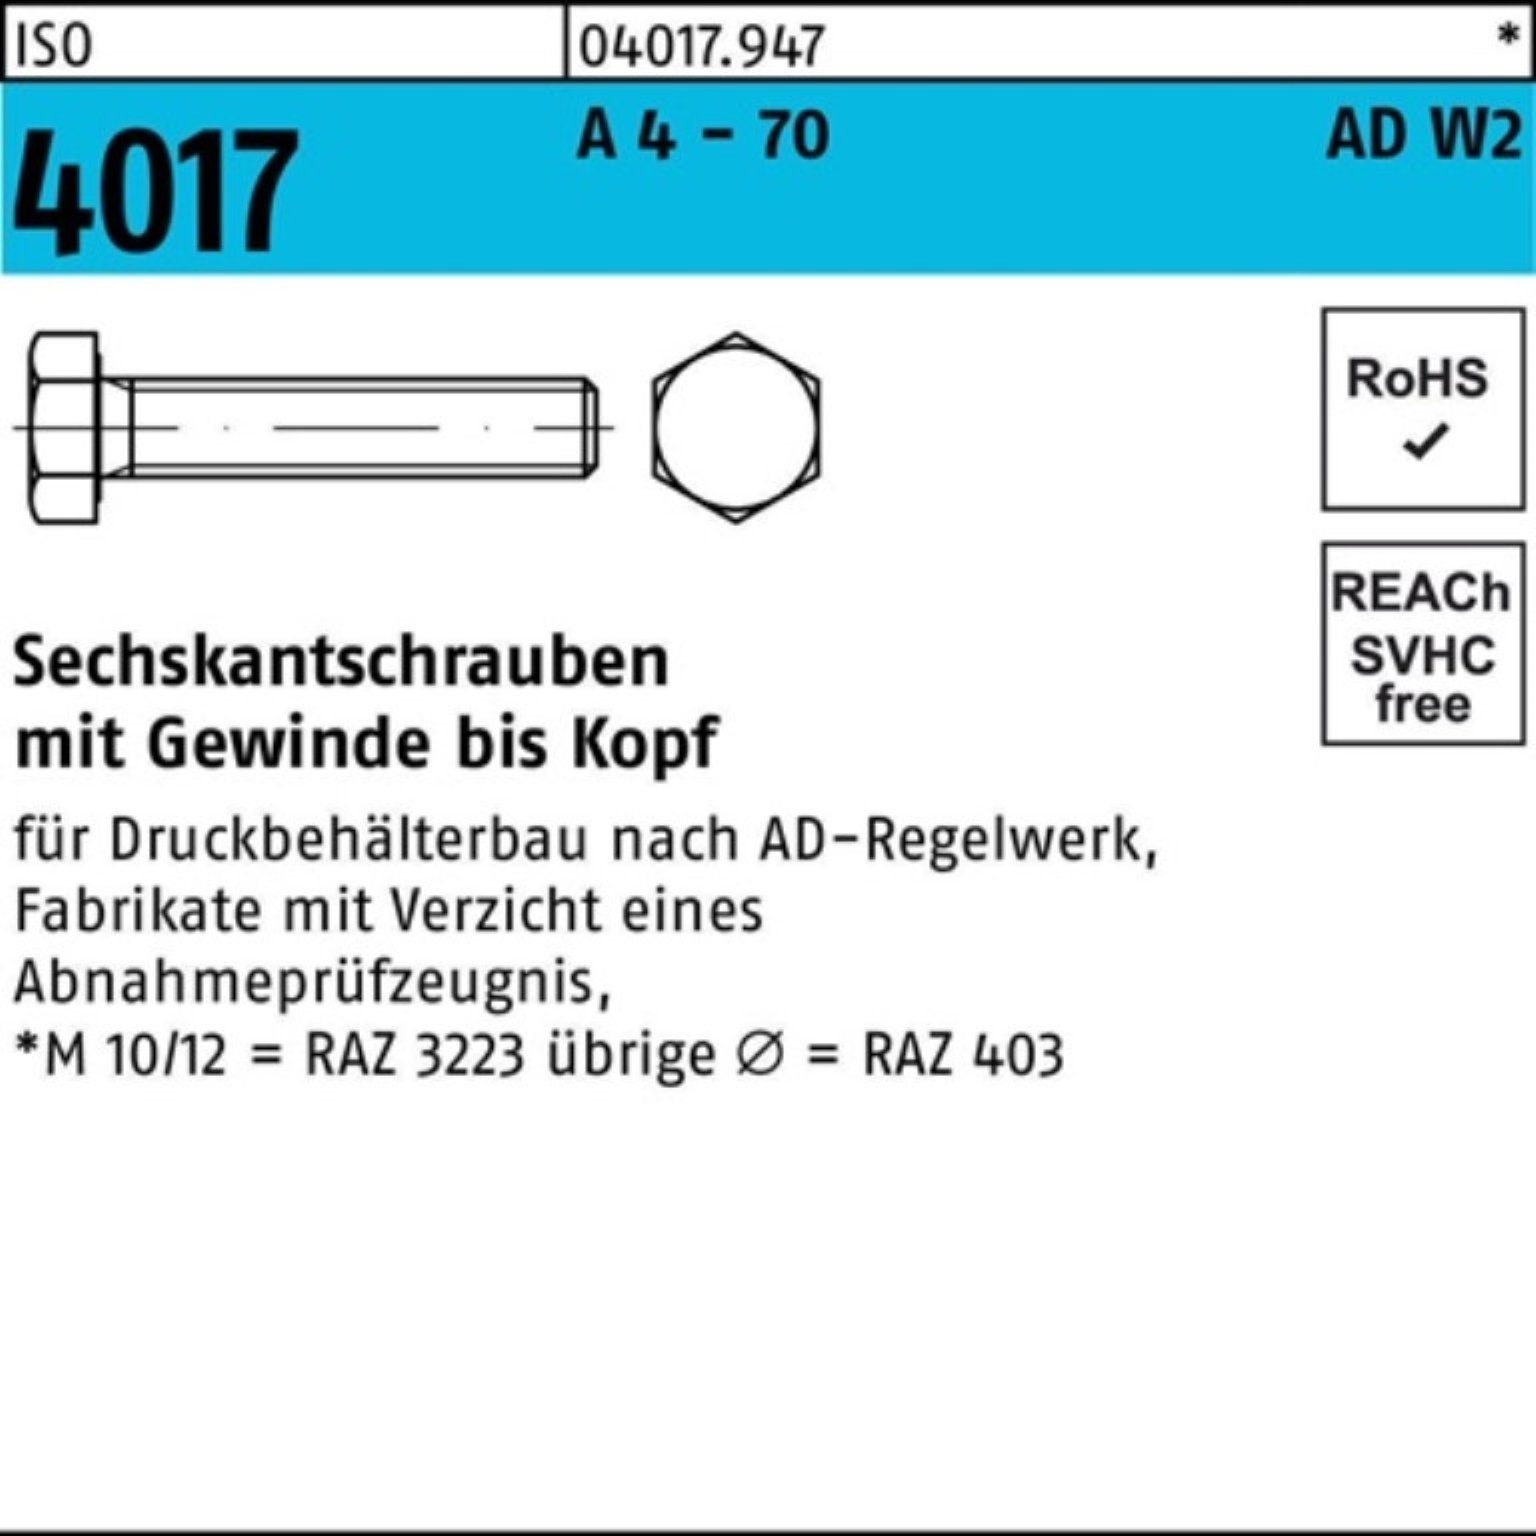 Bufab Sechskantschraube 200er Pack Sechskantschraube VG 20 AD-W2 4017 - 70 A M8x 4 200 St ISO